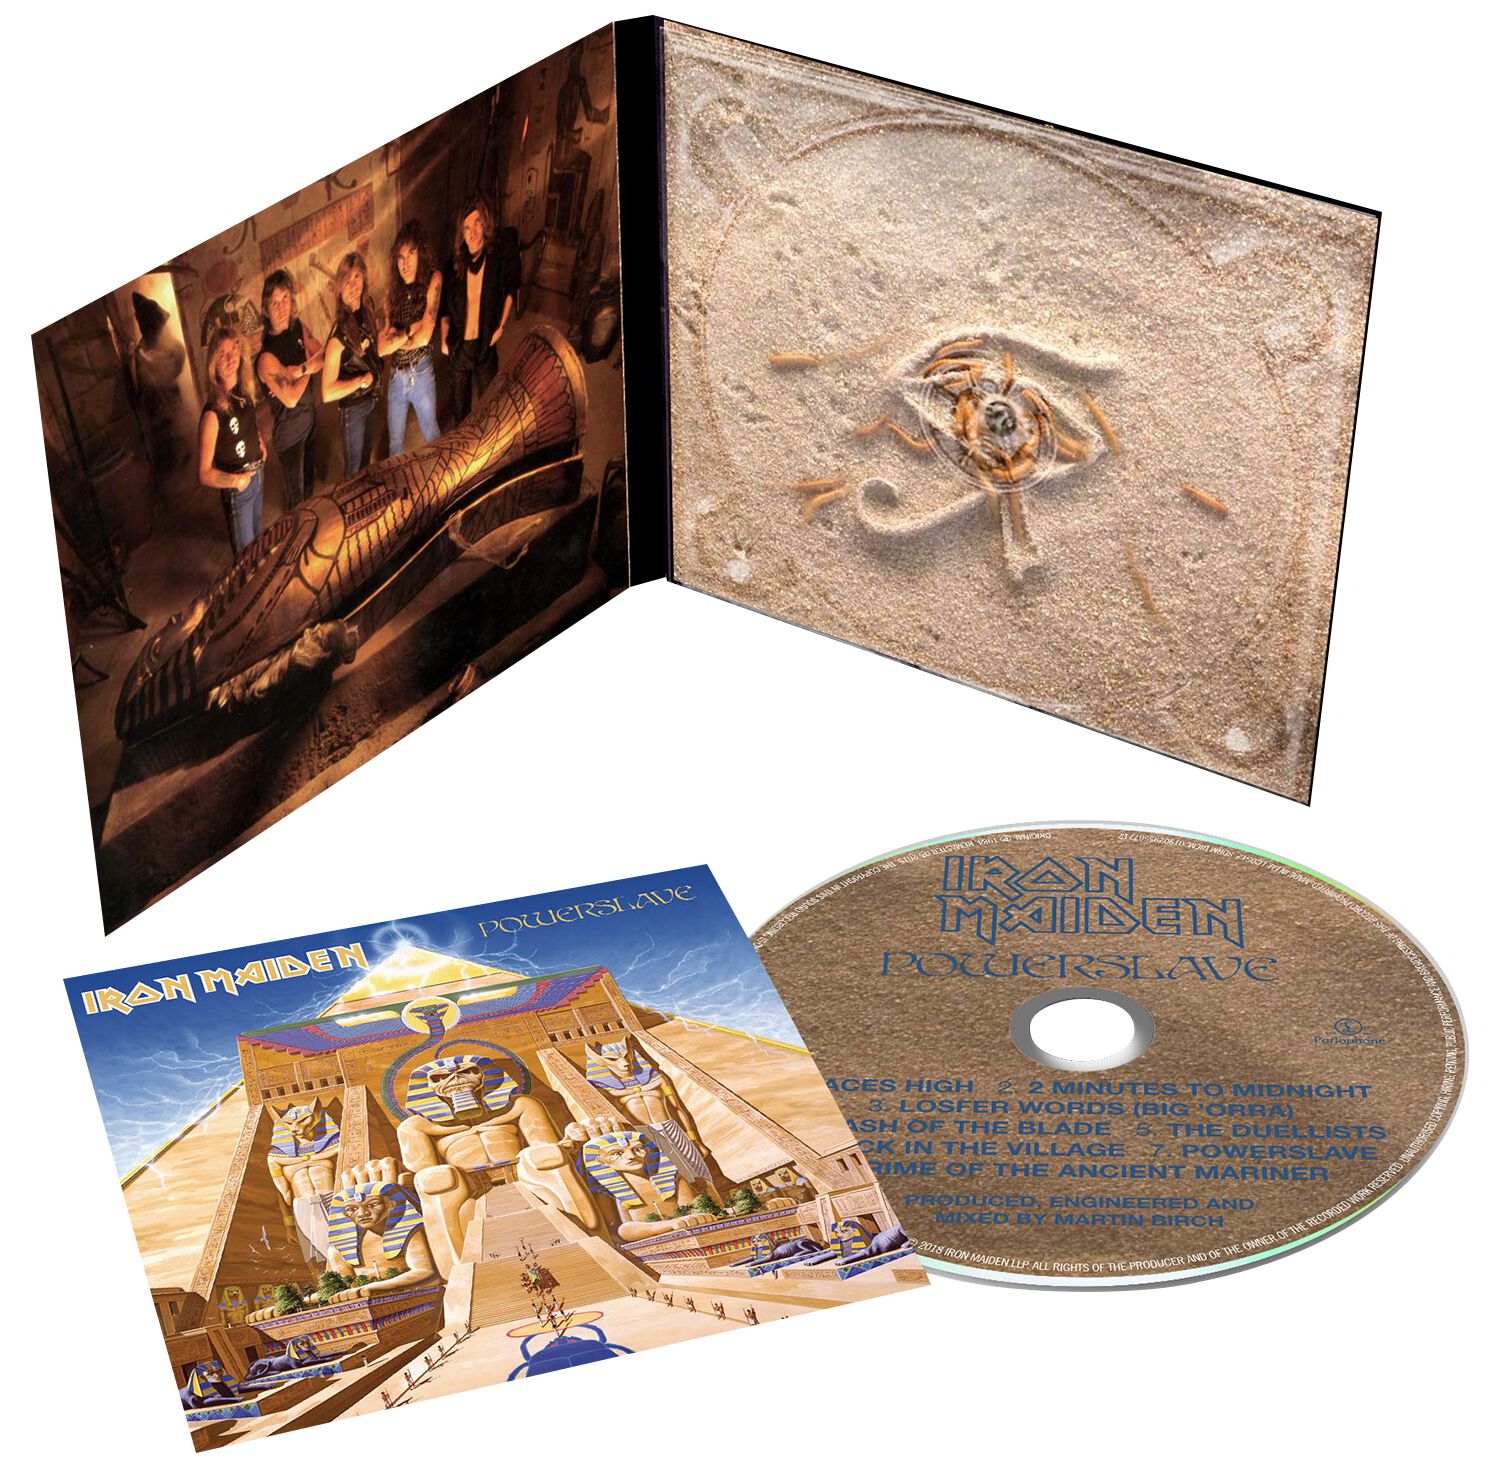 CD de Iron Maiden - Powerslave - para Standard product